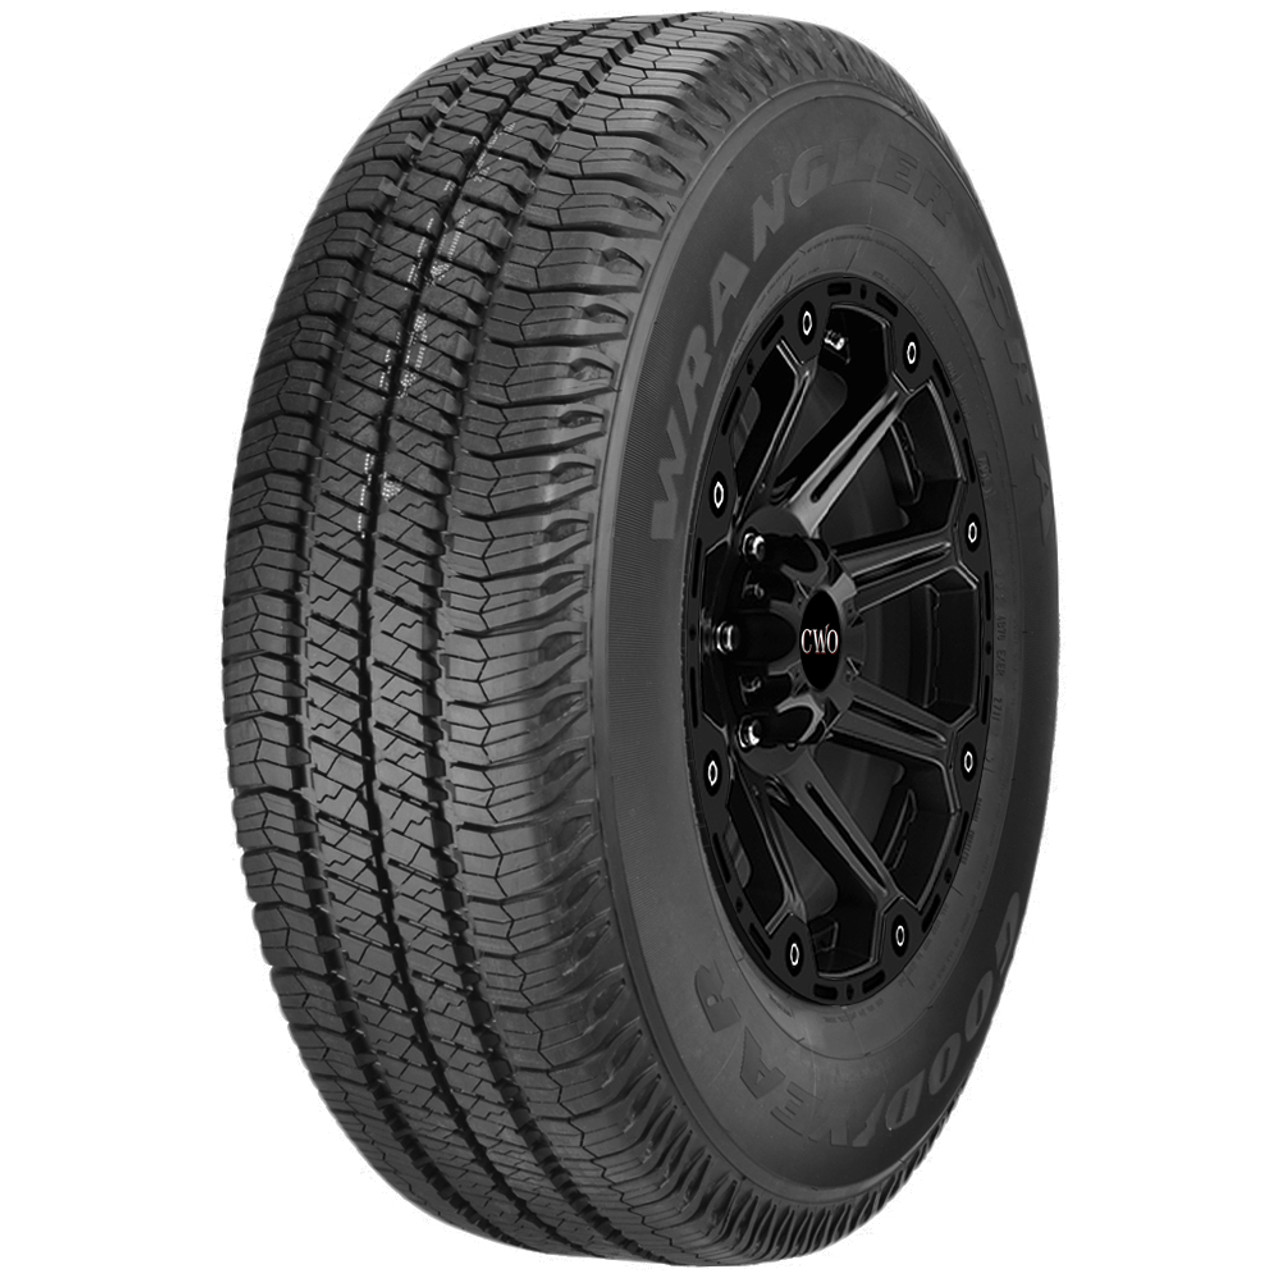 Goodyear Wrangler SR-A Tire P275/60R20 183934470